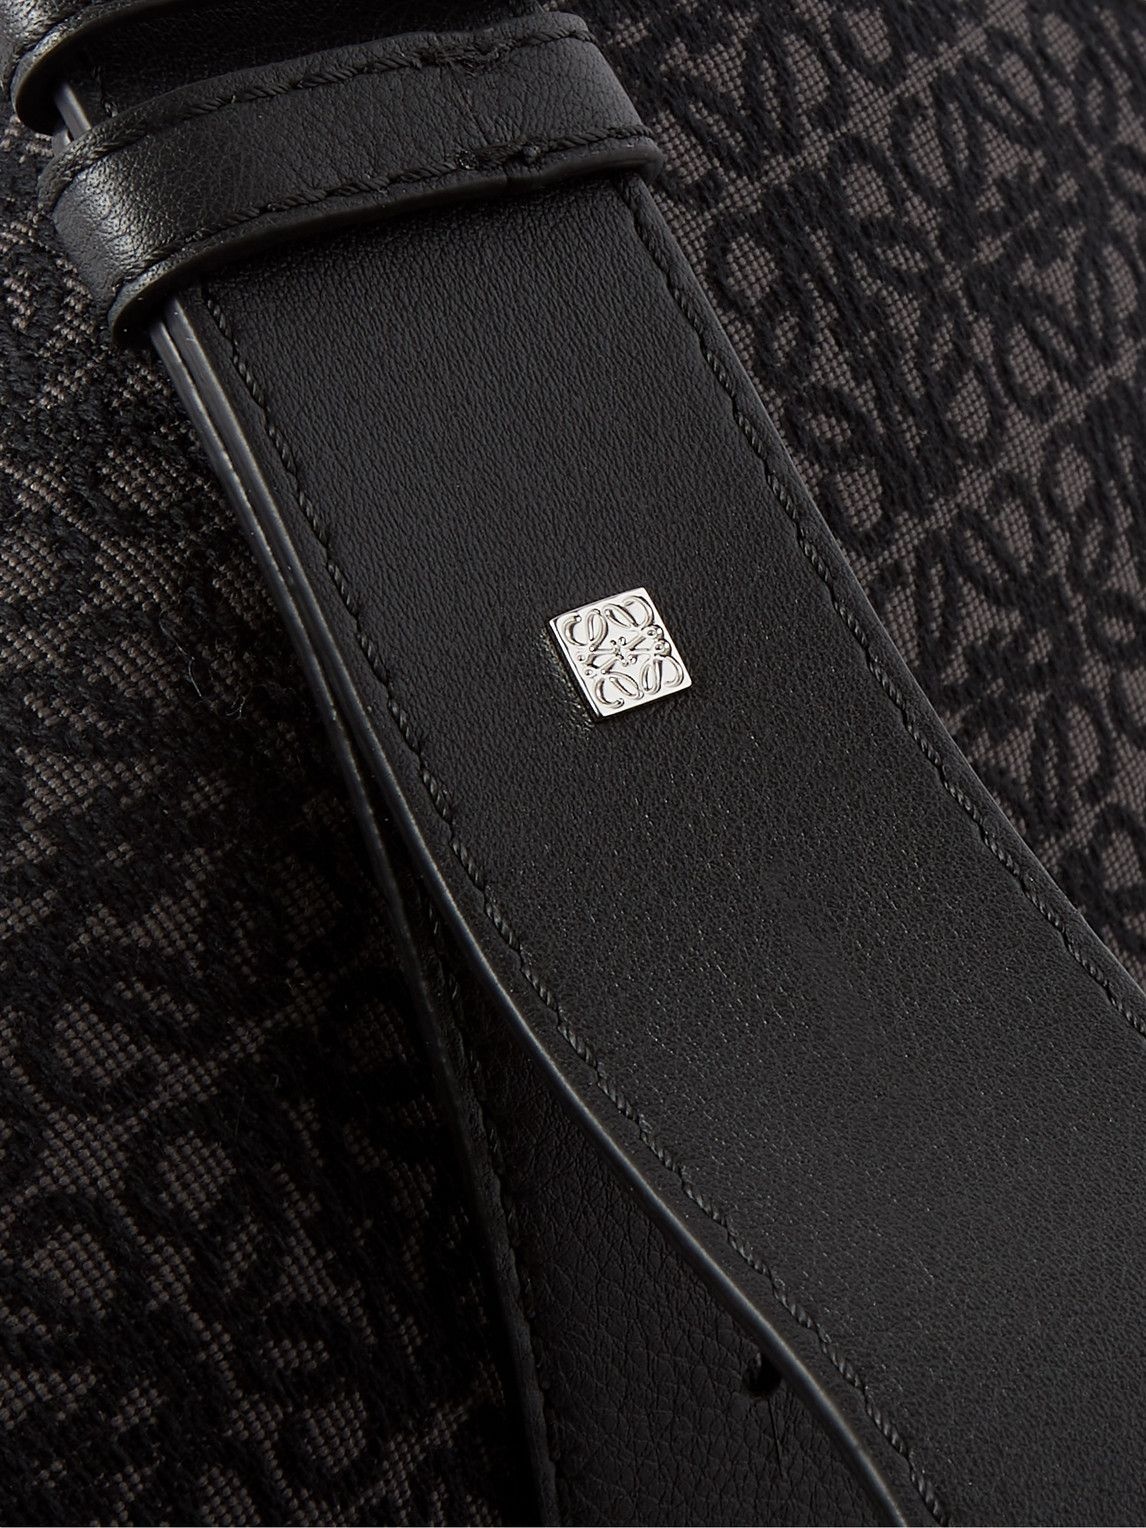 Loewe Luxury Anton Sling in supple smooth calf and jacquard - ShopStyle  Backpacks